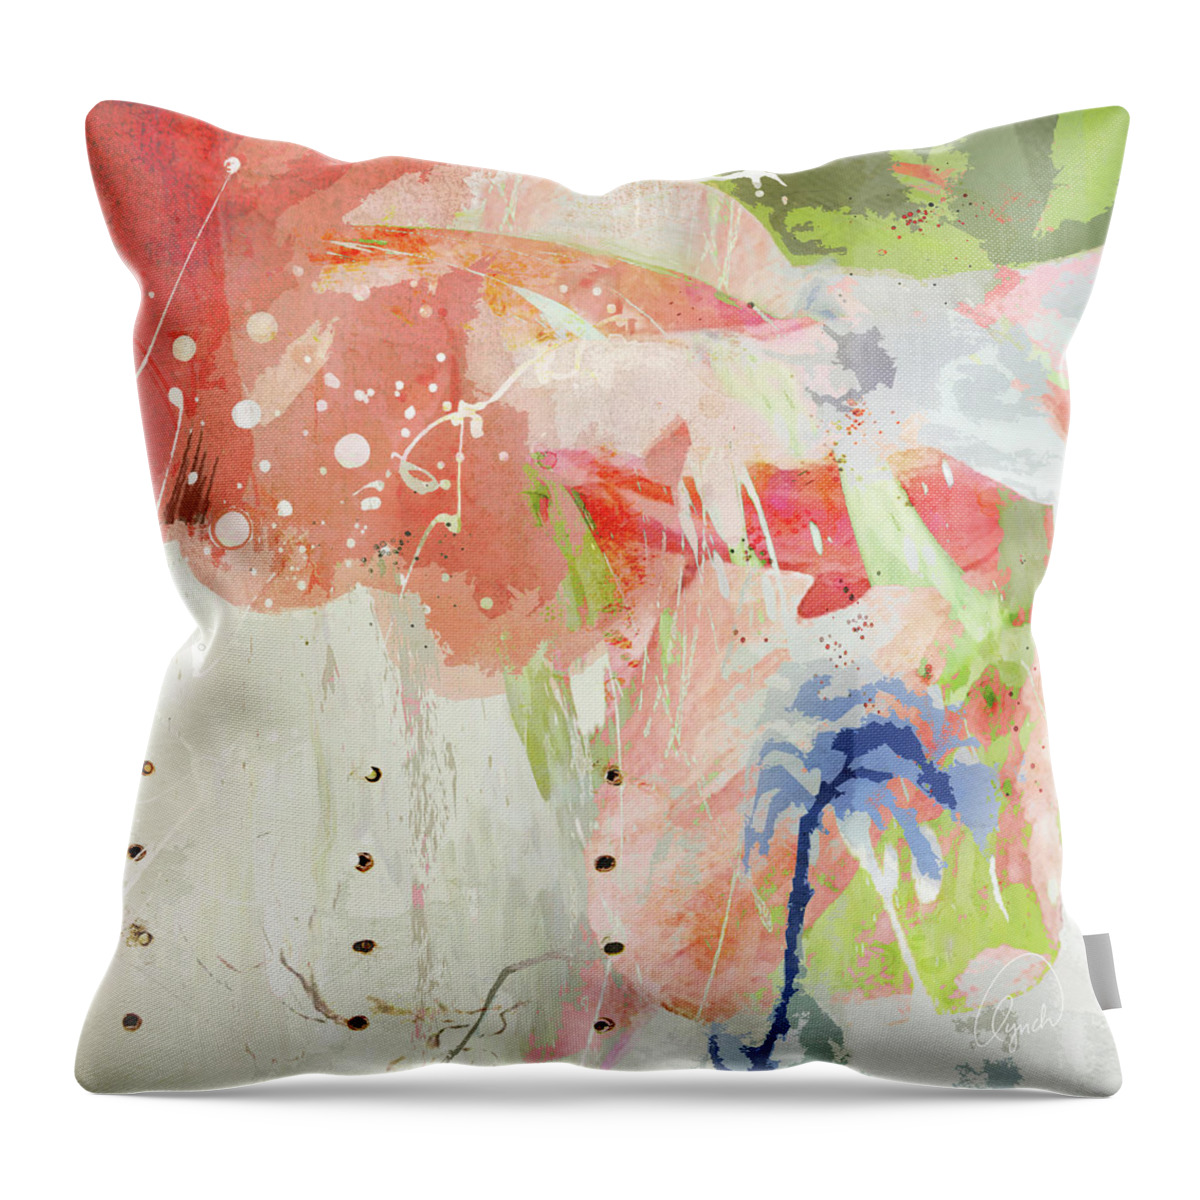 Abstract Throw Pillow featuring the photograph Dutch Treat by Karen Lynch